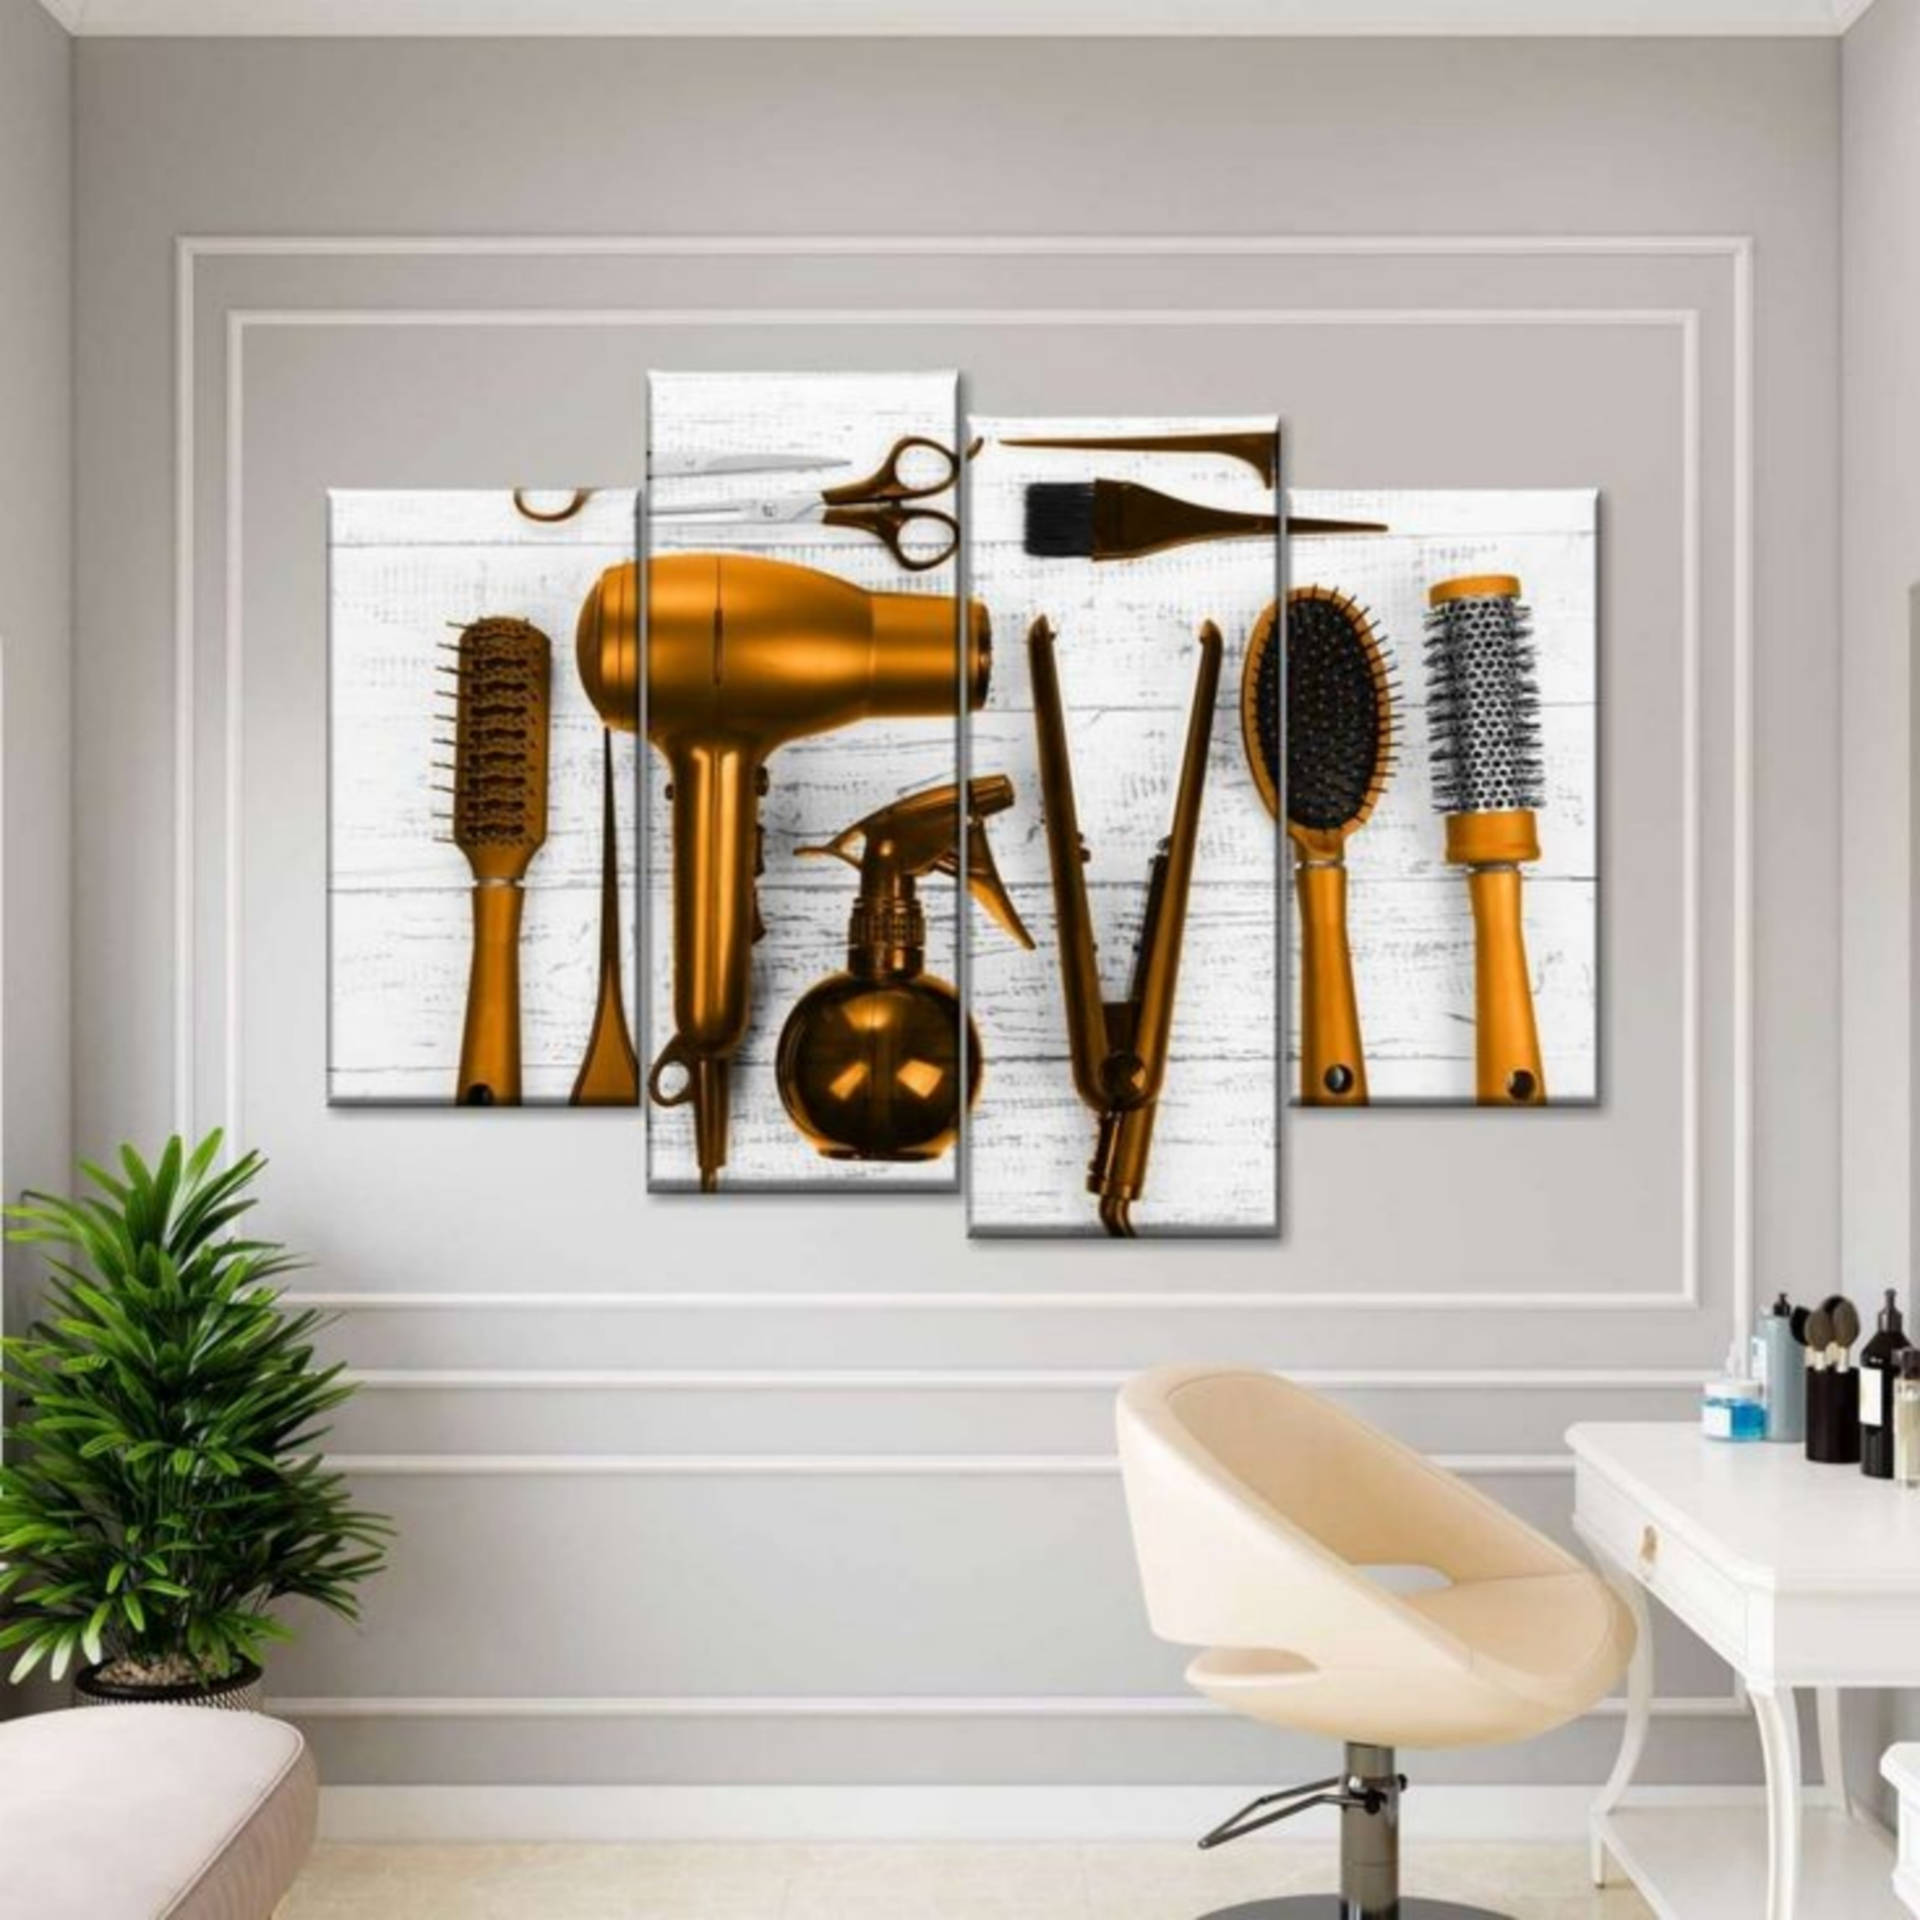 Wooden Hair Salon Wall Frame Background